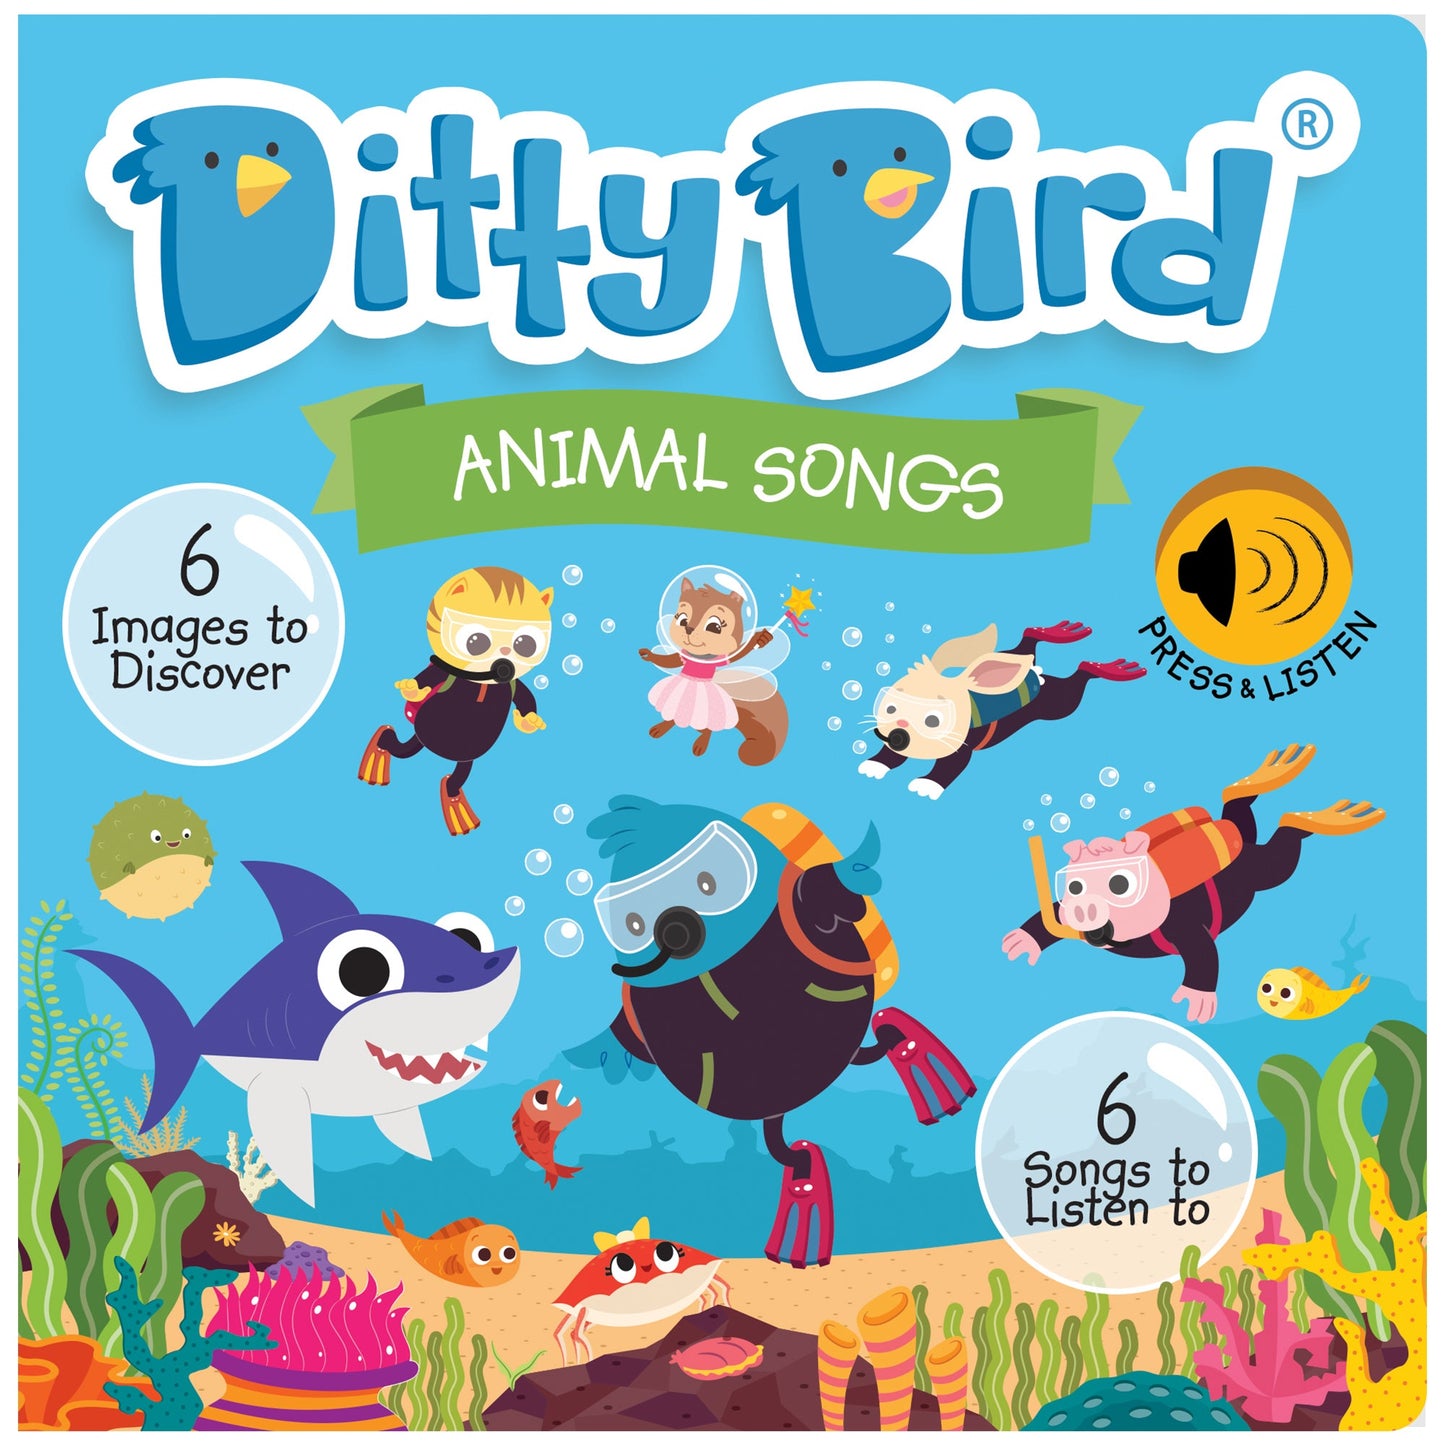 DITTY BIRD Sound Book: Animal Songs